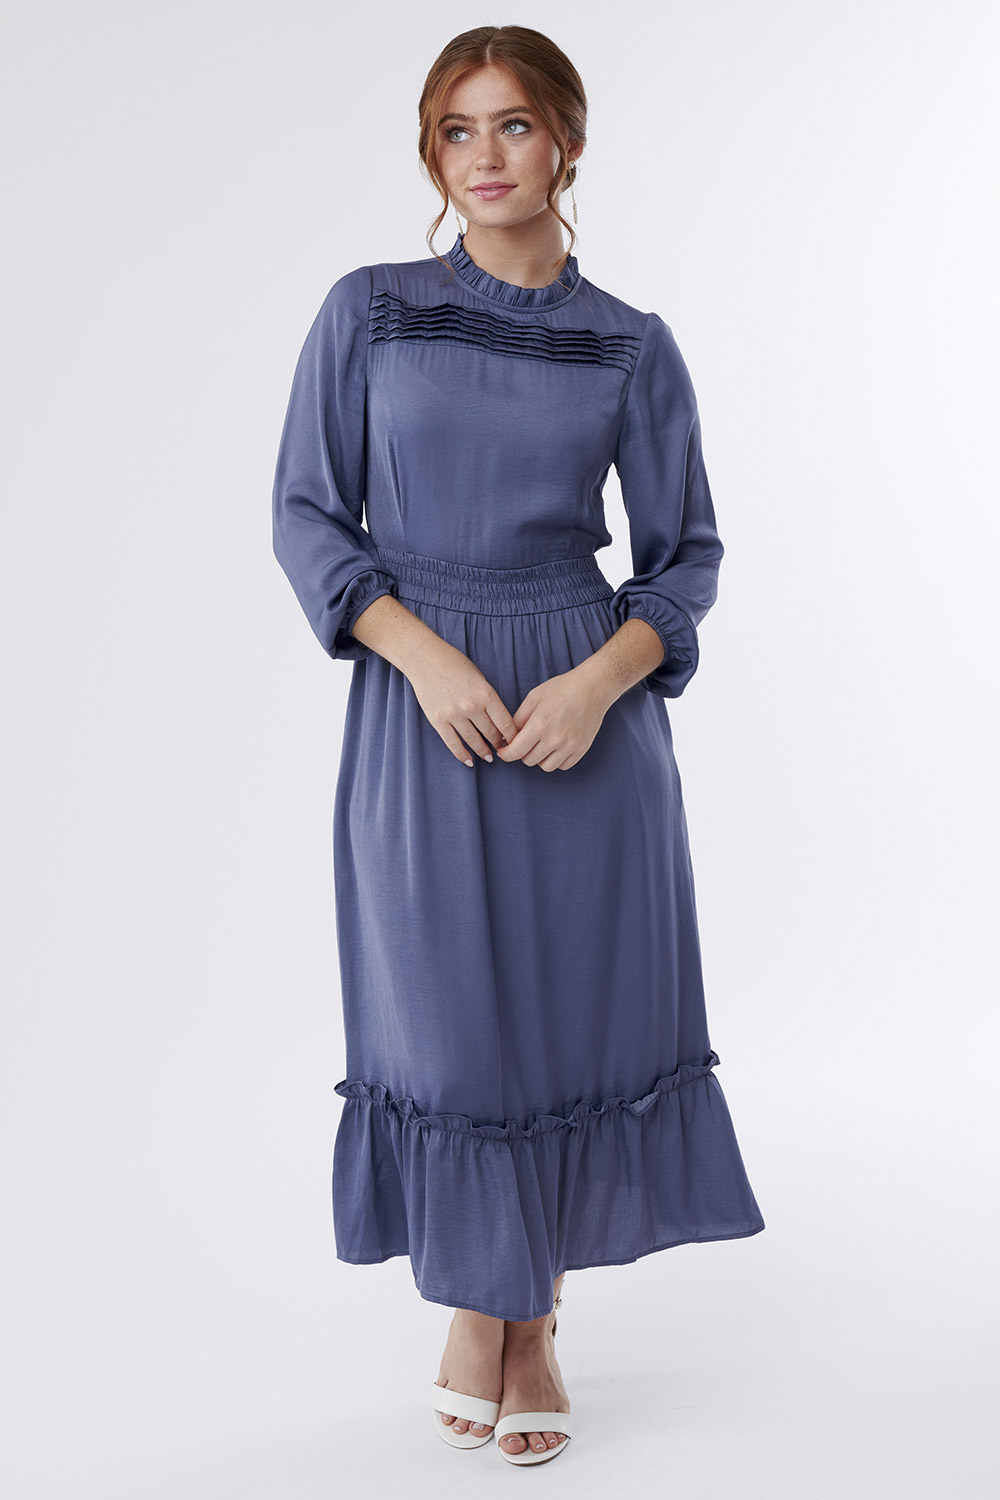 Dress Pin Tuck Yoke Ruffle Detail Blue | Sweet Salt Modest Clothing